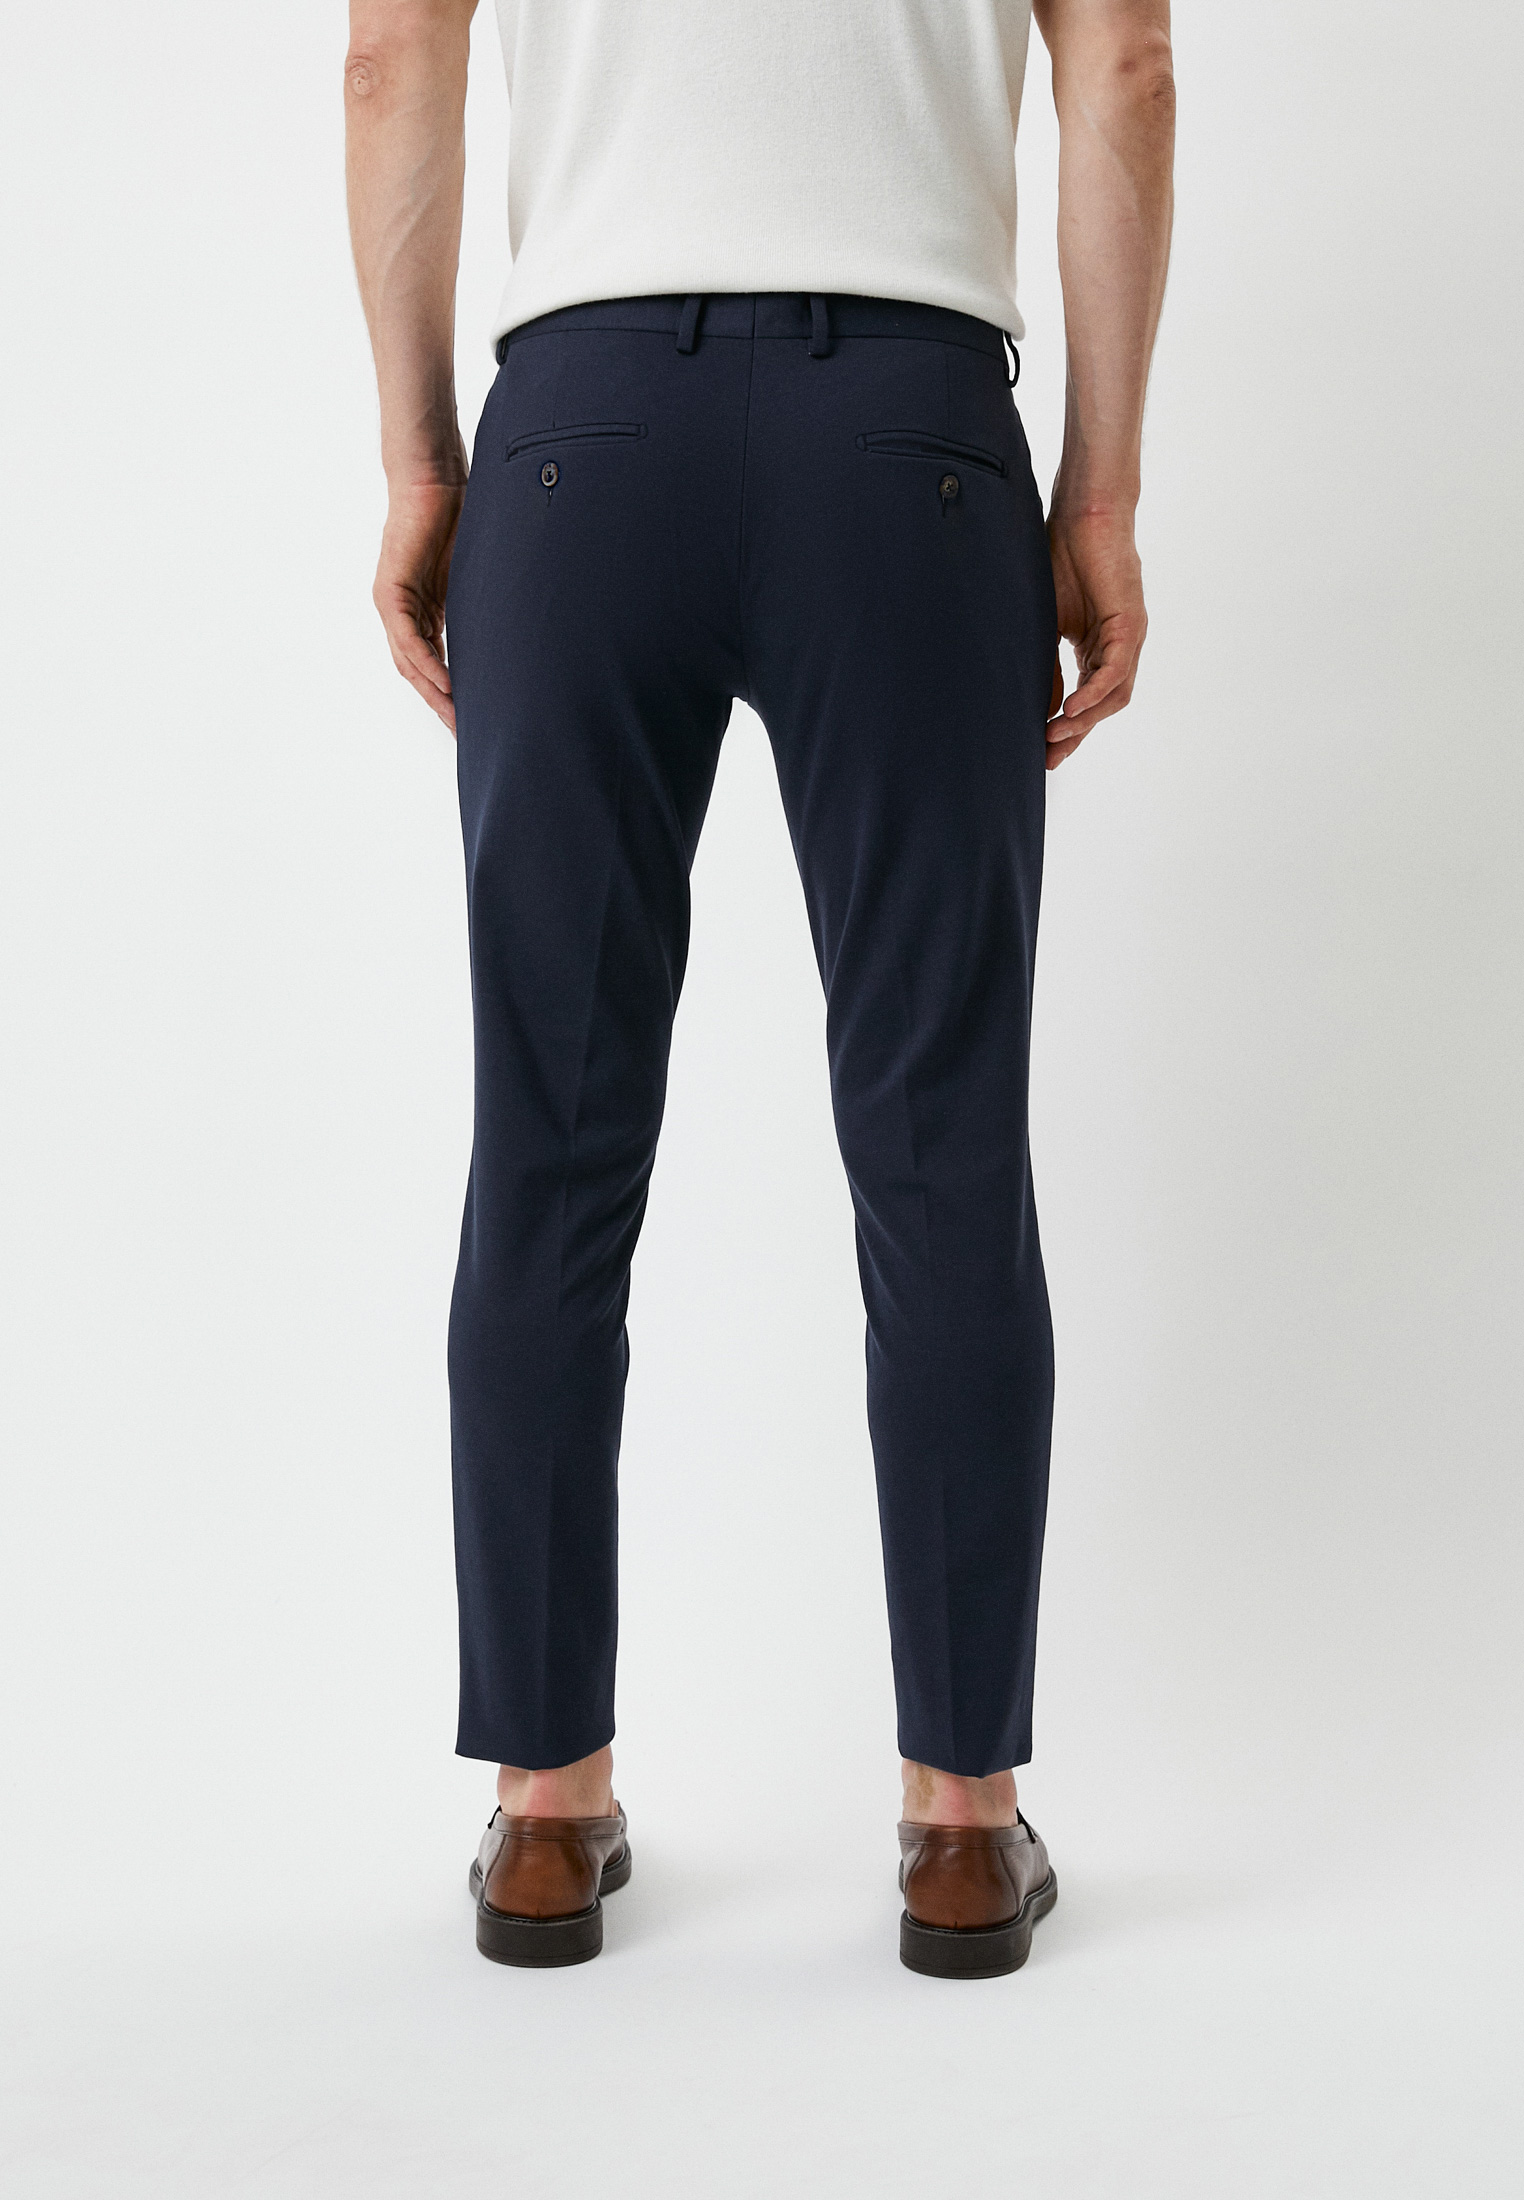 Мужские классические брюки Baldinini (Балдинини) M604: изображение 3